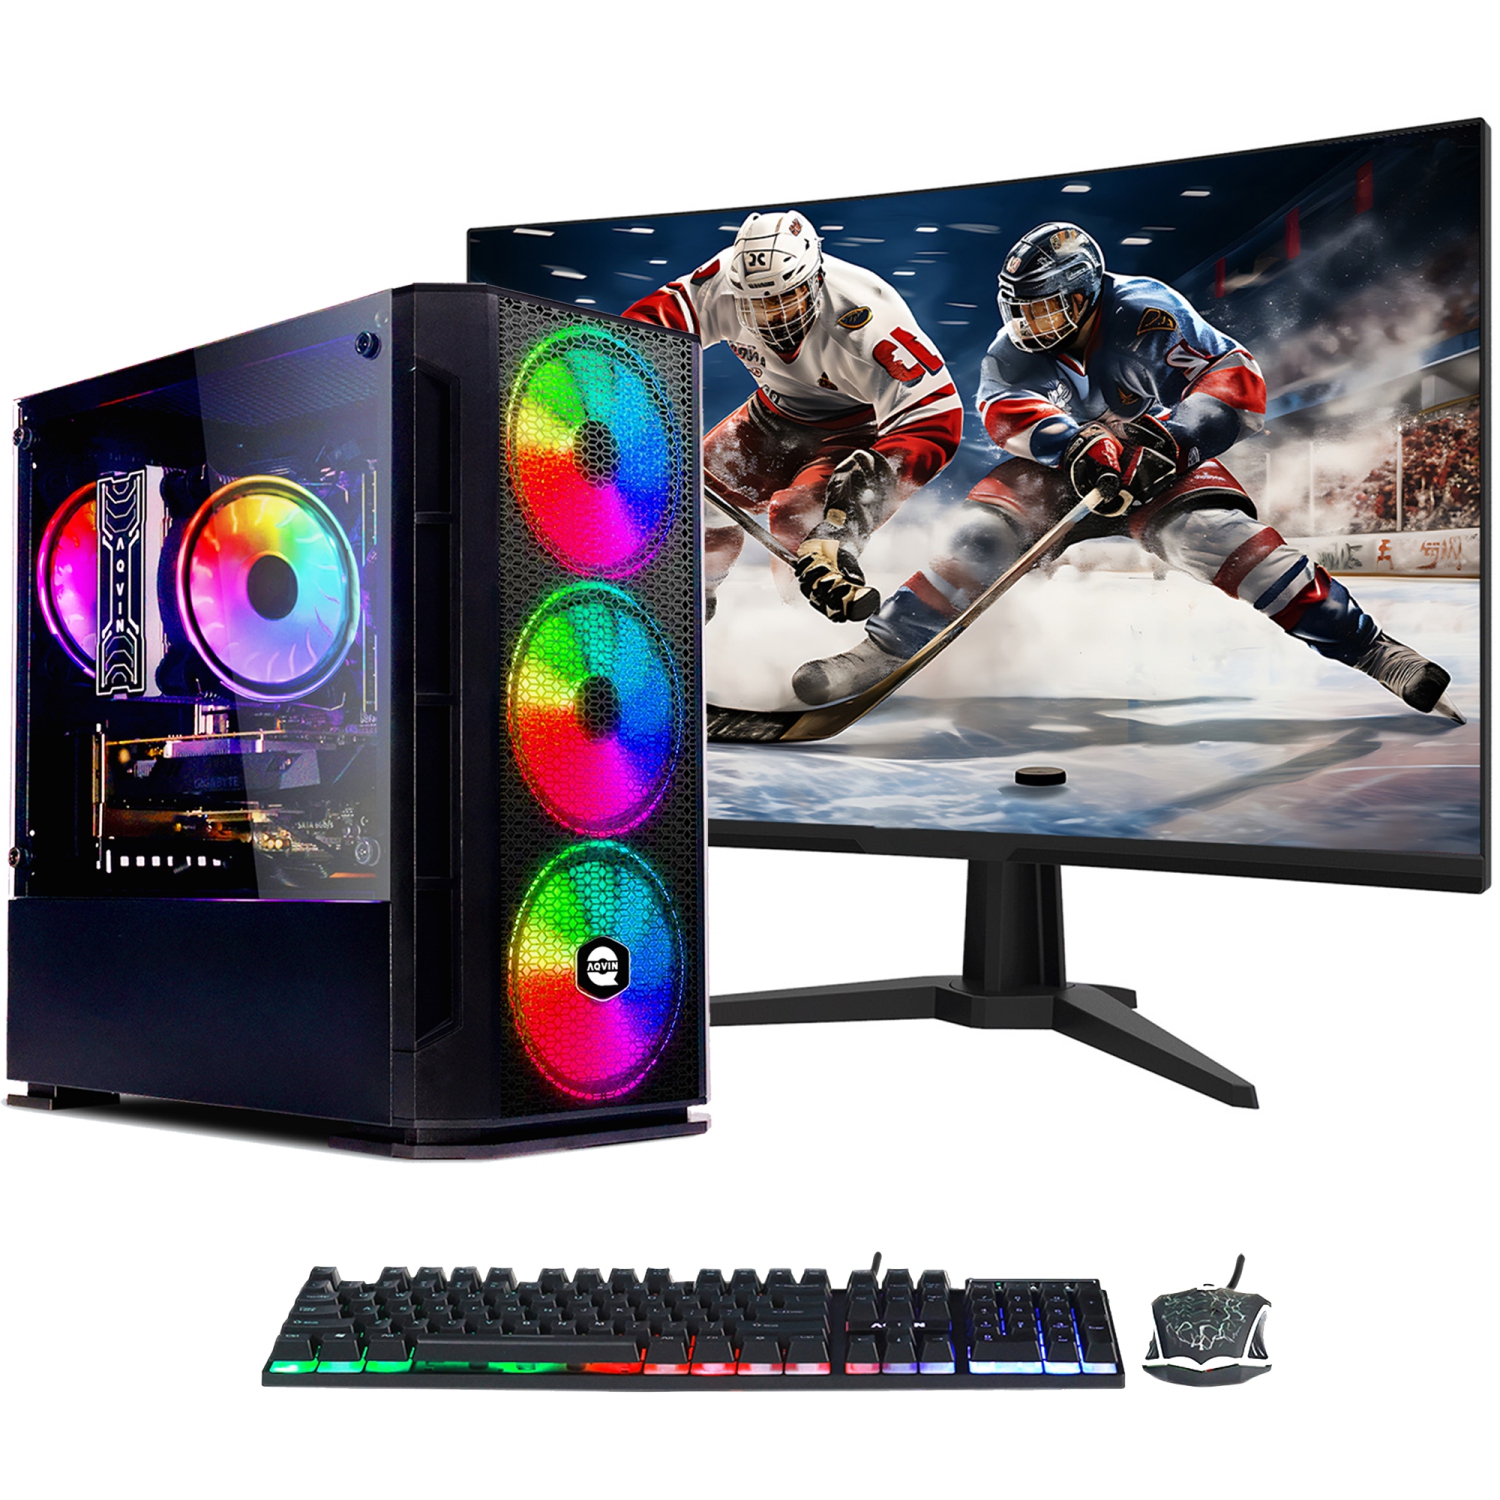 Gaming PC AQVIN AQ10 Desktop Computer Tower| RGB Fan Lights| Core i7 CPU upto 4.00 GHz| 2TB SSD (fast boot)| 32GB RAM| AMD RX 580| Windows 10 Pro| New 27 inch Curved Gaming Monitor